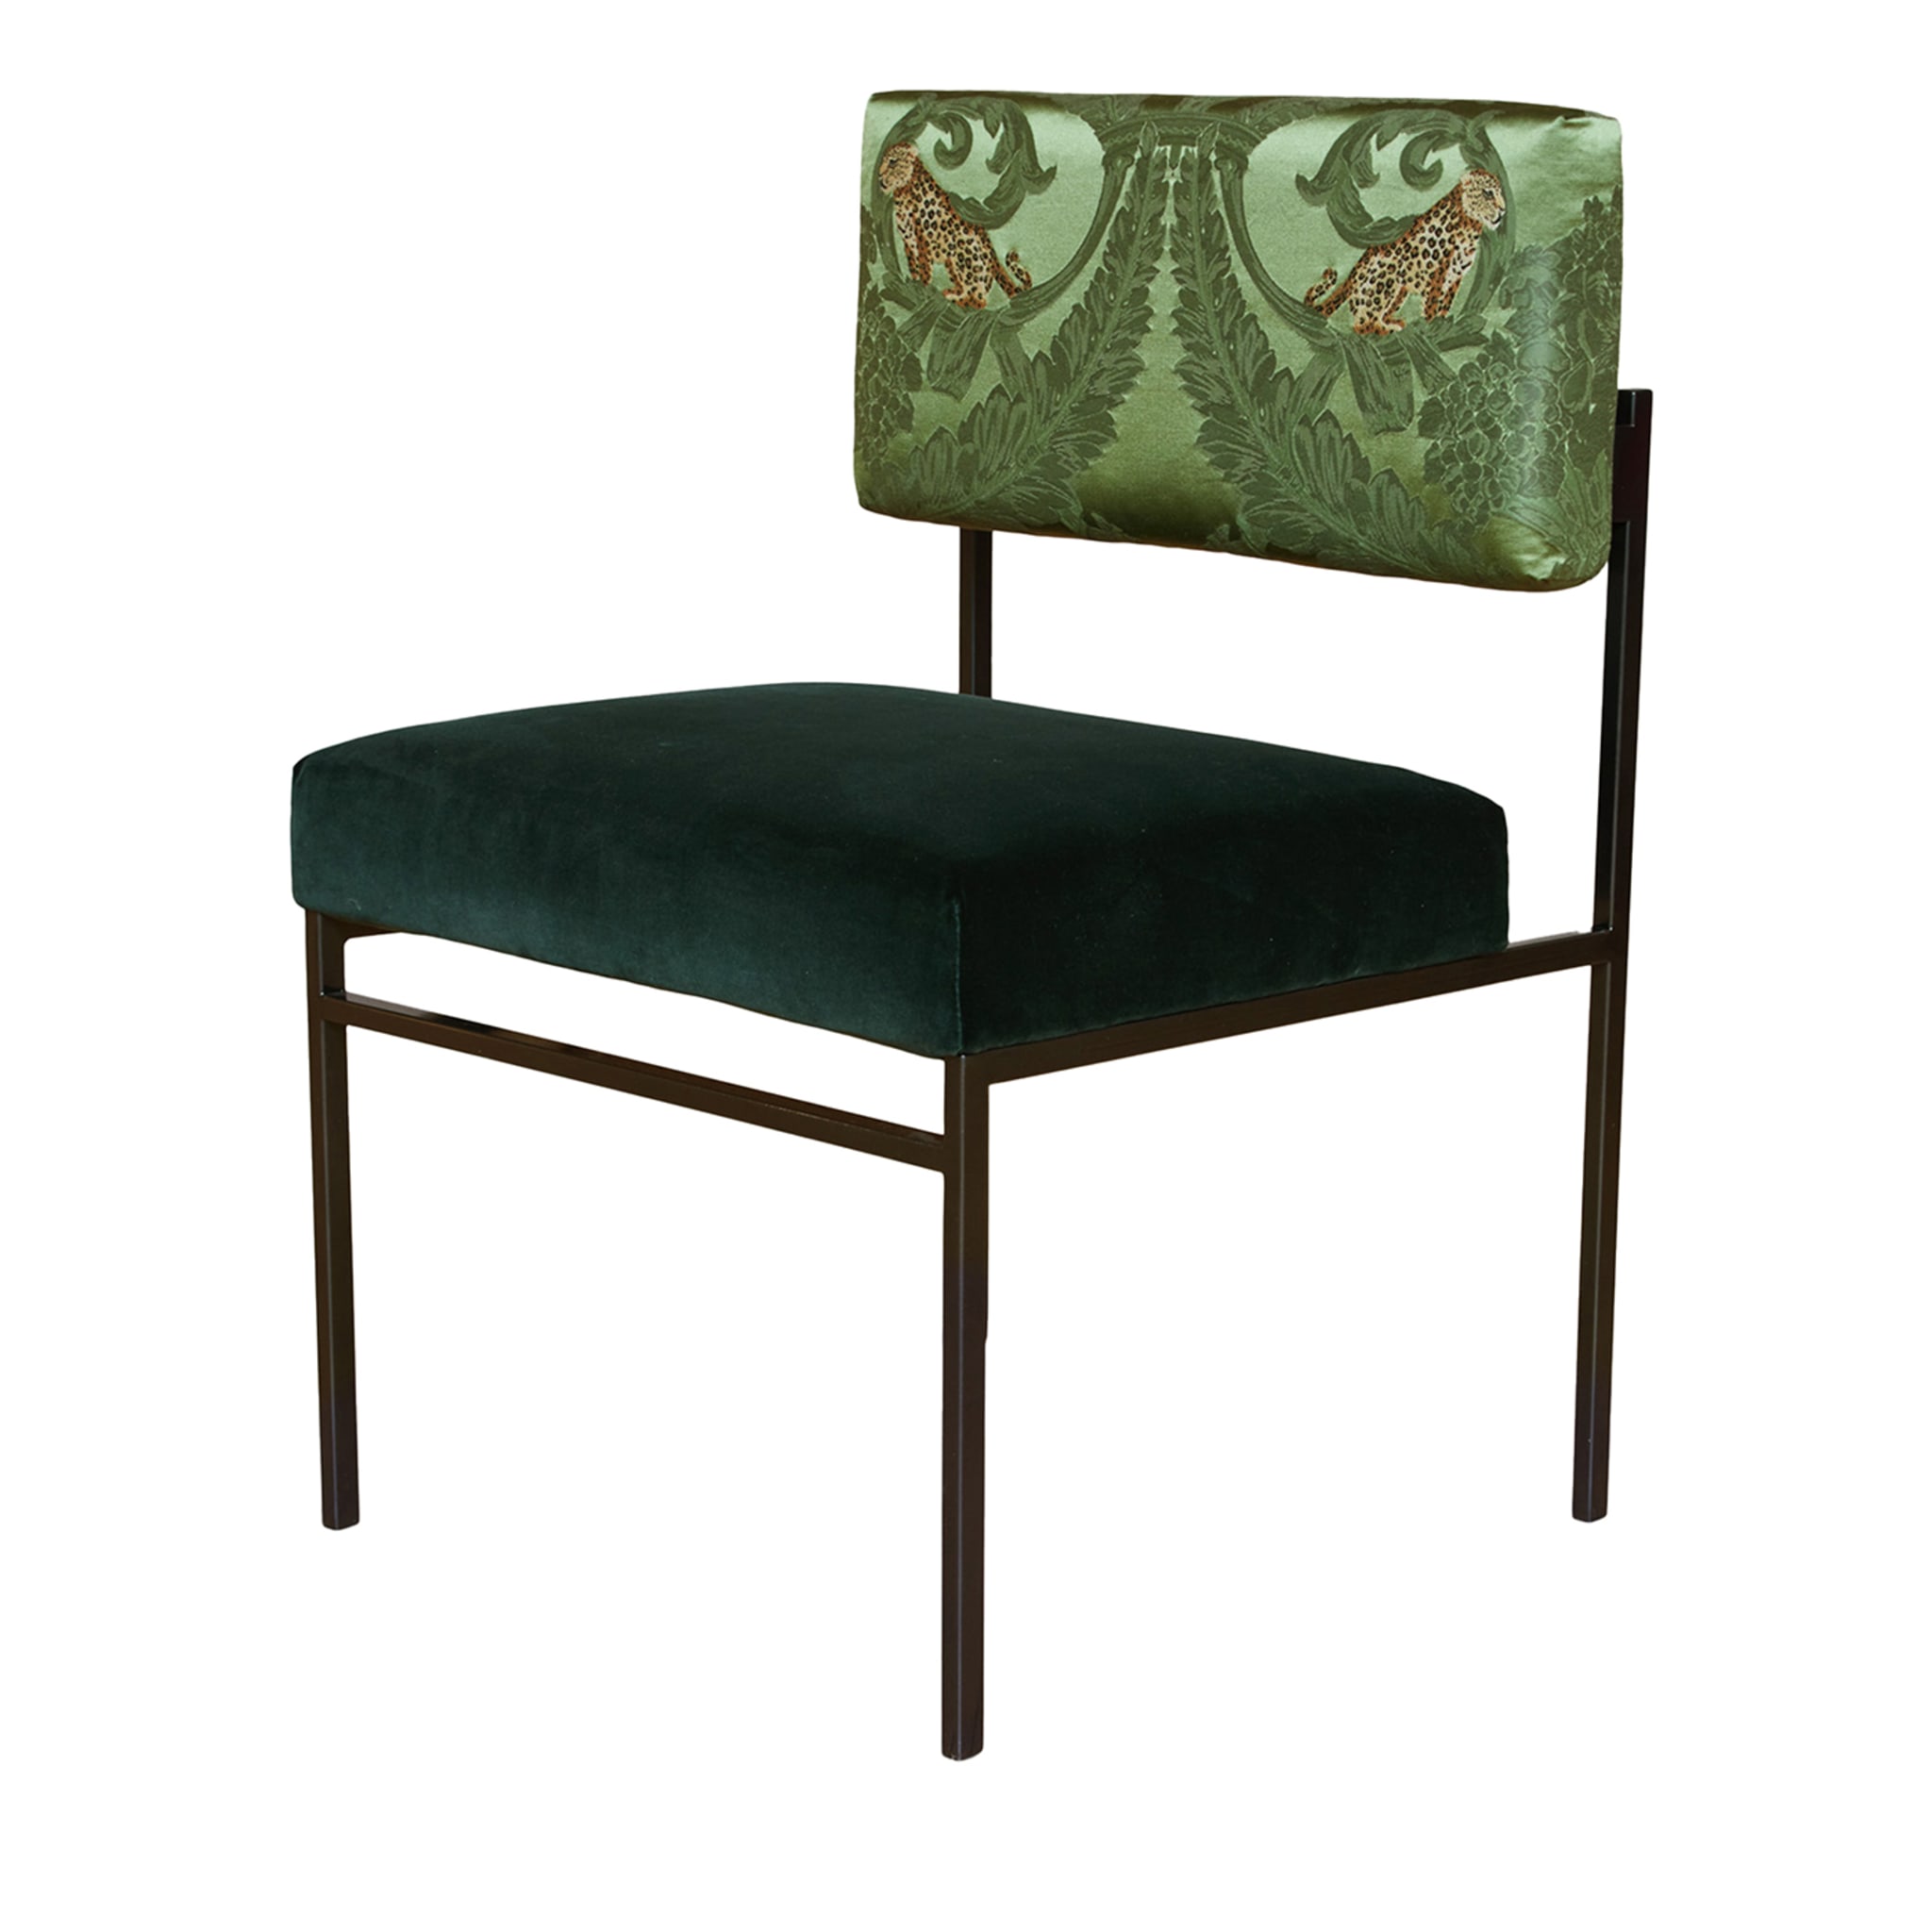 Aurea Green Jungle Dining Chair - Main view